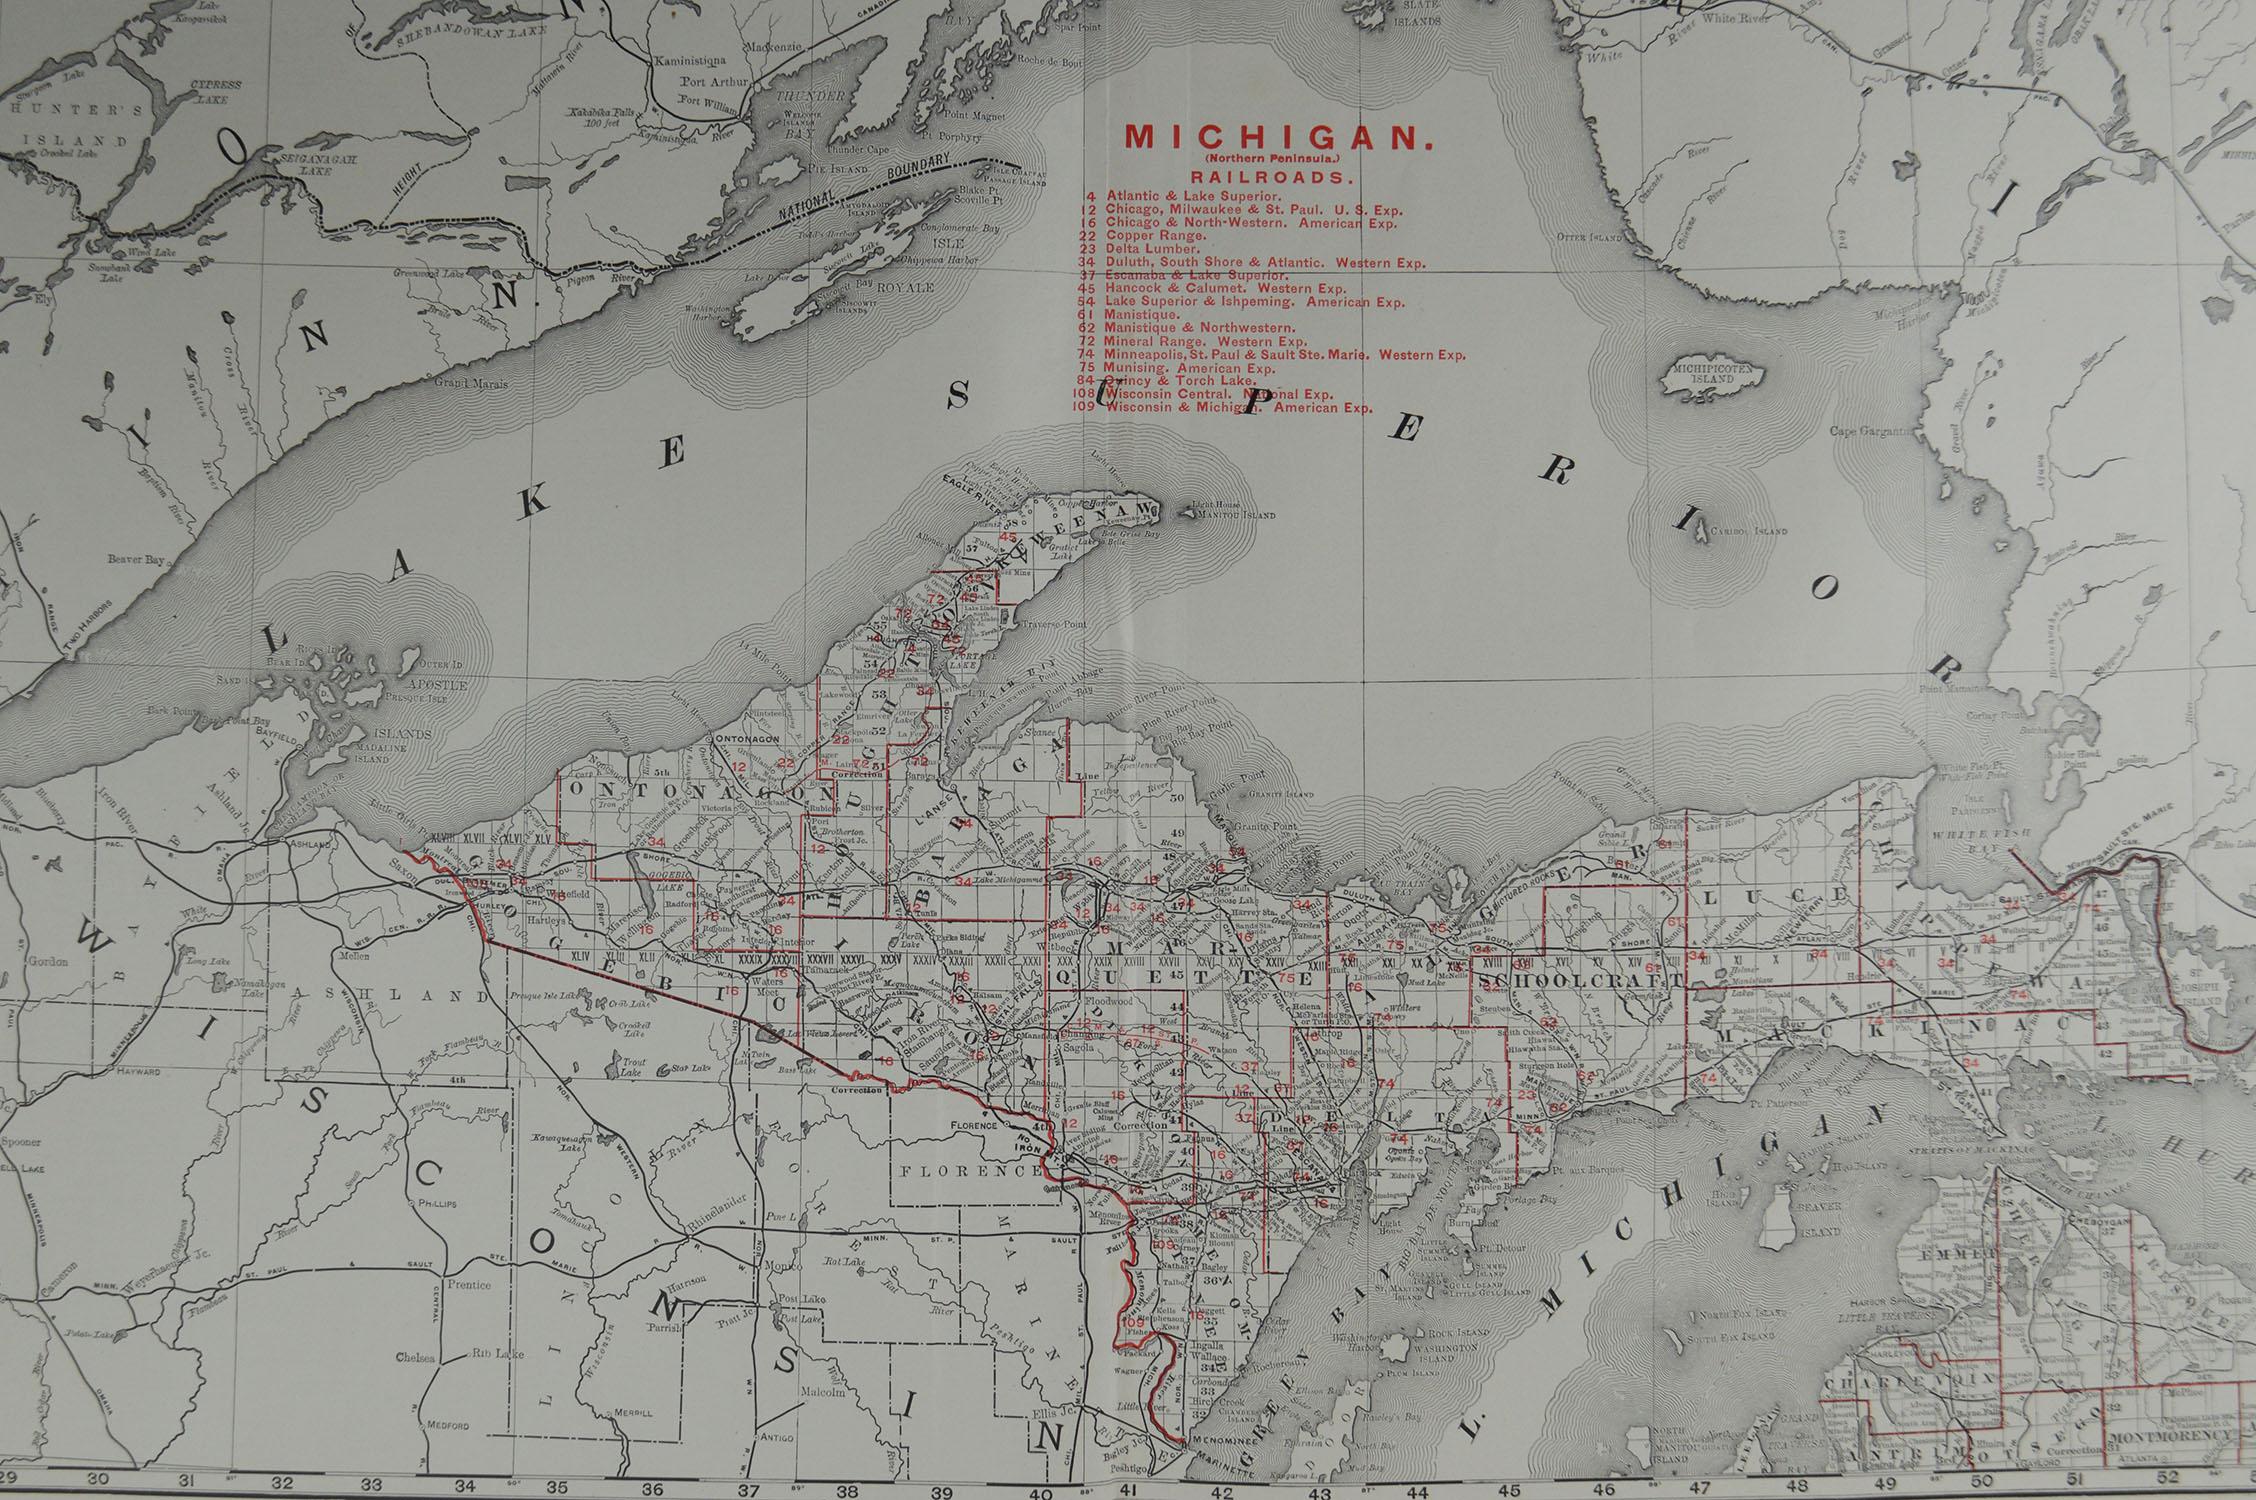 American Large Original Antique Map of Michigan by Rand McNally, circa 1900